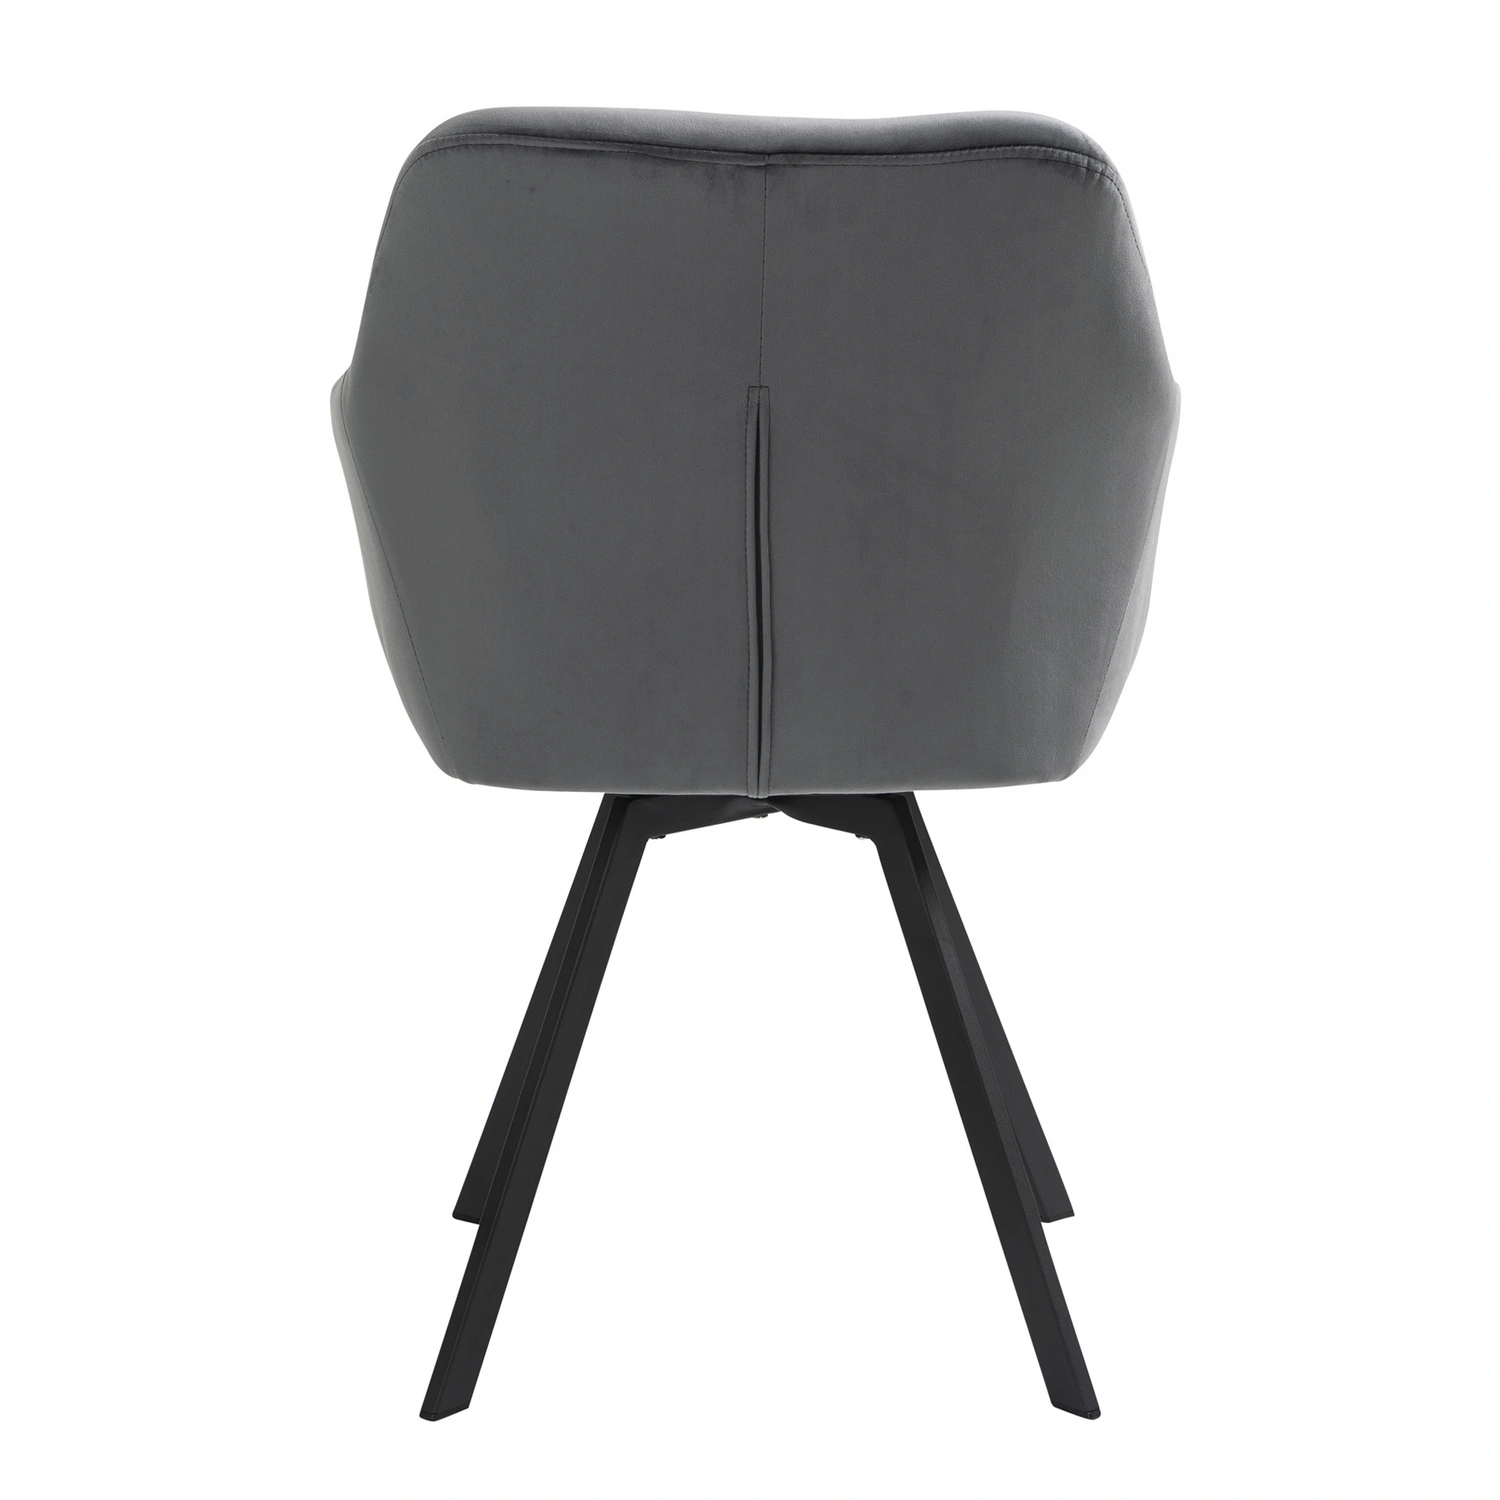 85 SalesFever cm, Höhe: grau/schwarz Stuhl,